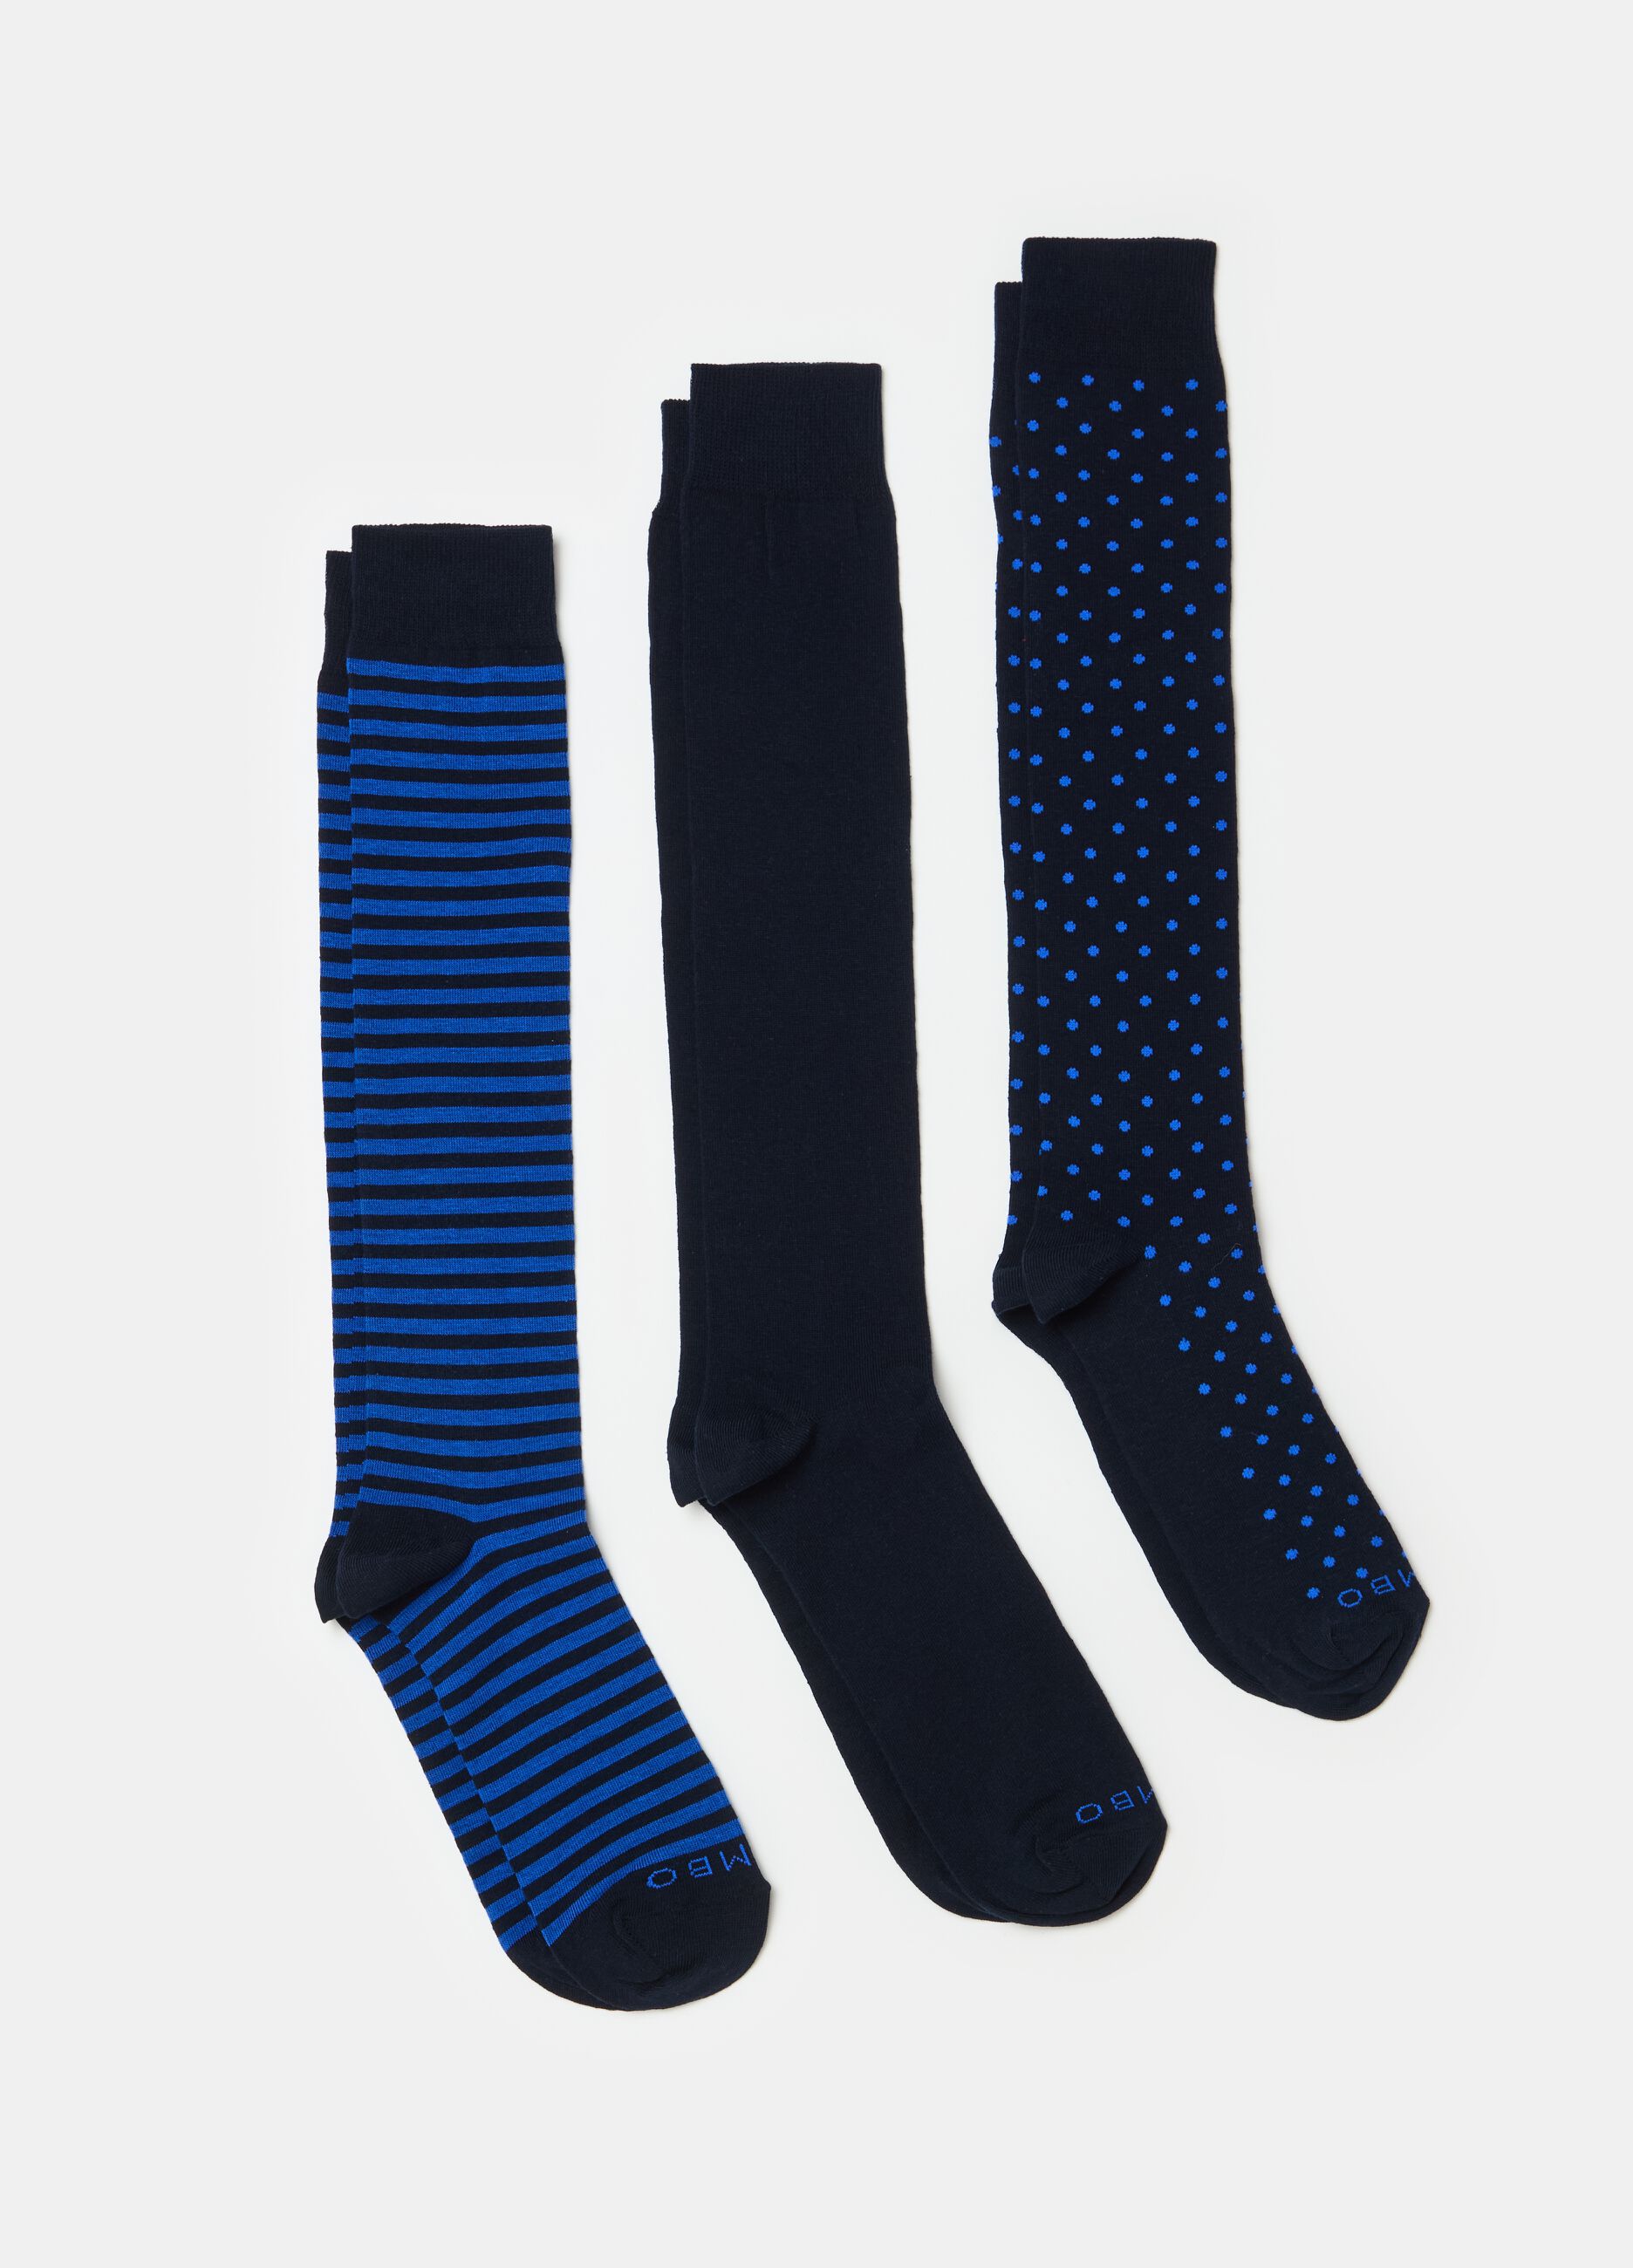 Three-pair pack long socks with polka dots and stripes